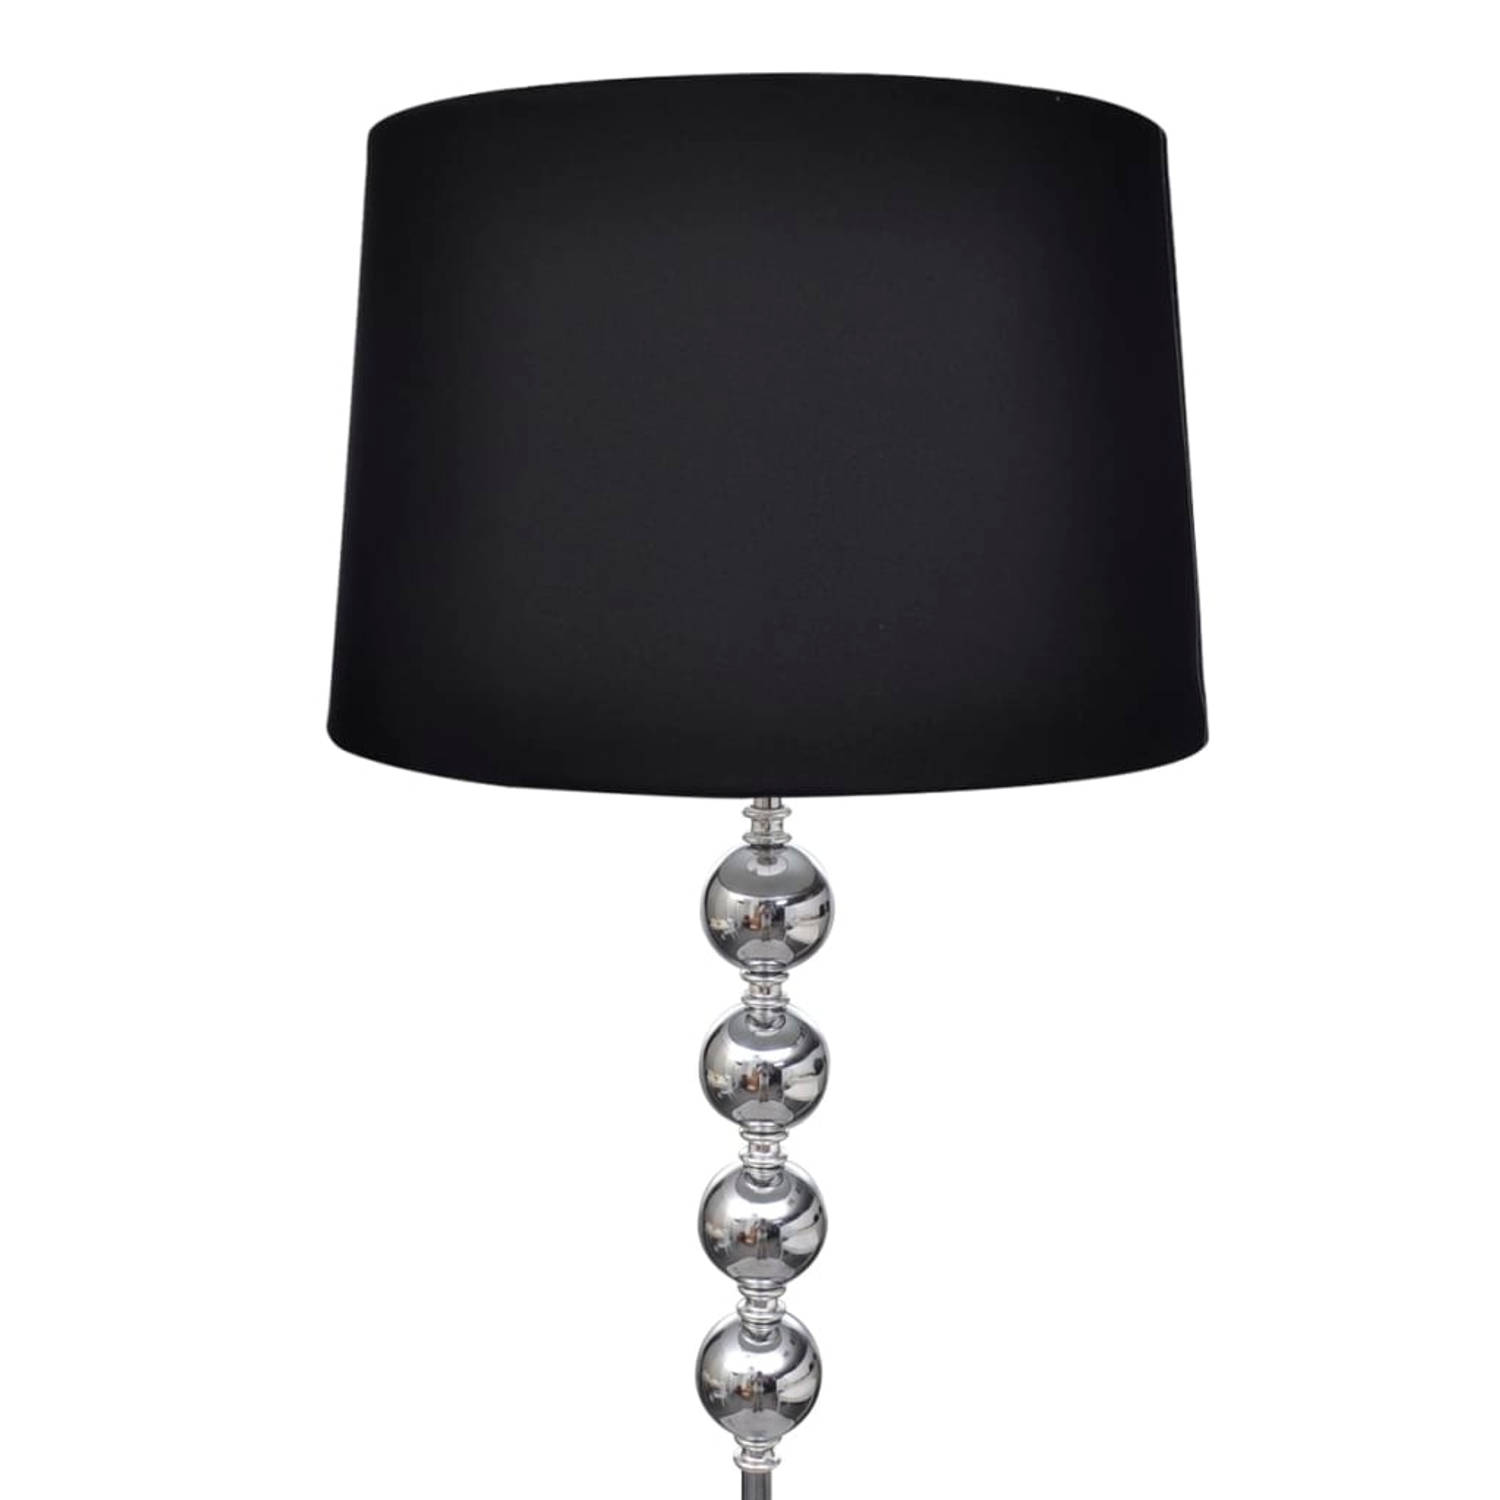 The Living Store Vloerlampen Moderne zwarte lamp met chromen buis 380 mm lampenkap 235 mm basisplaat